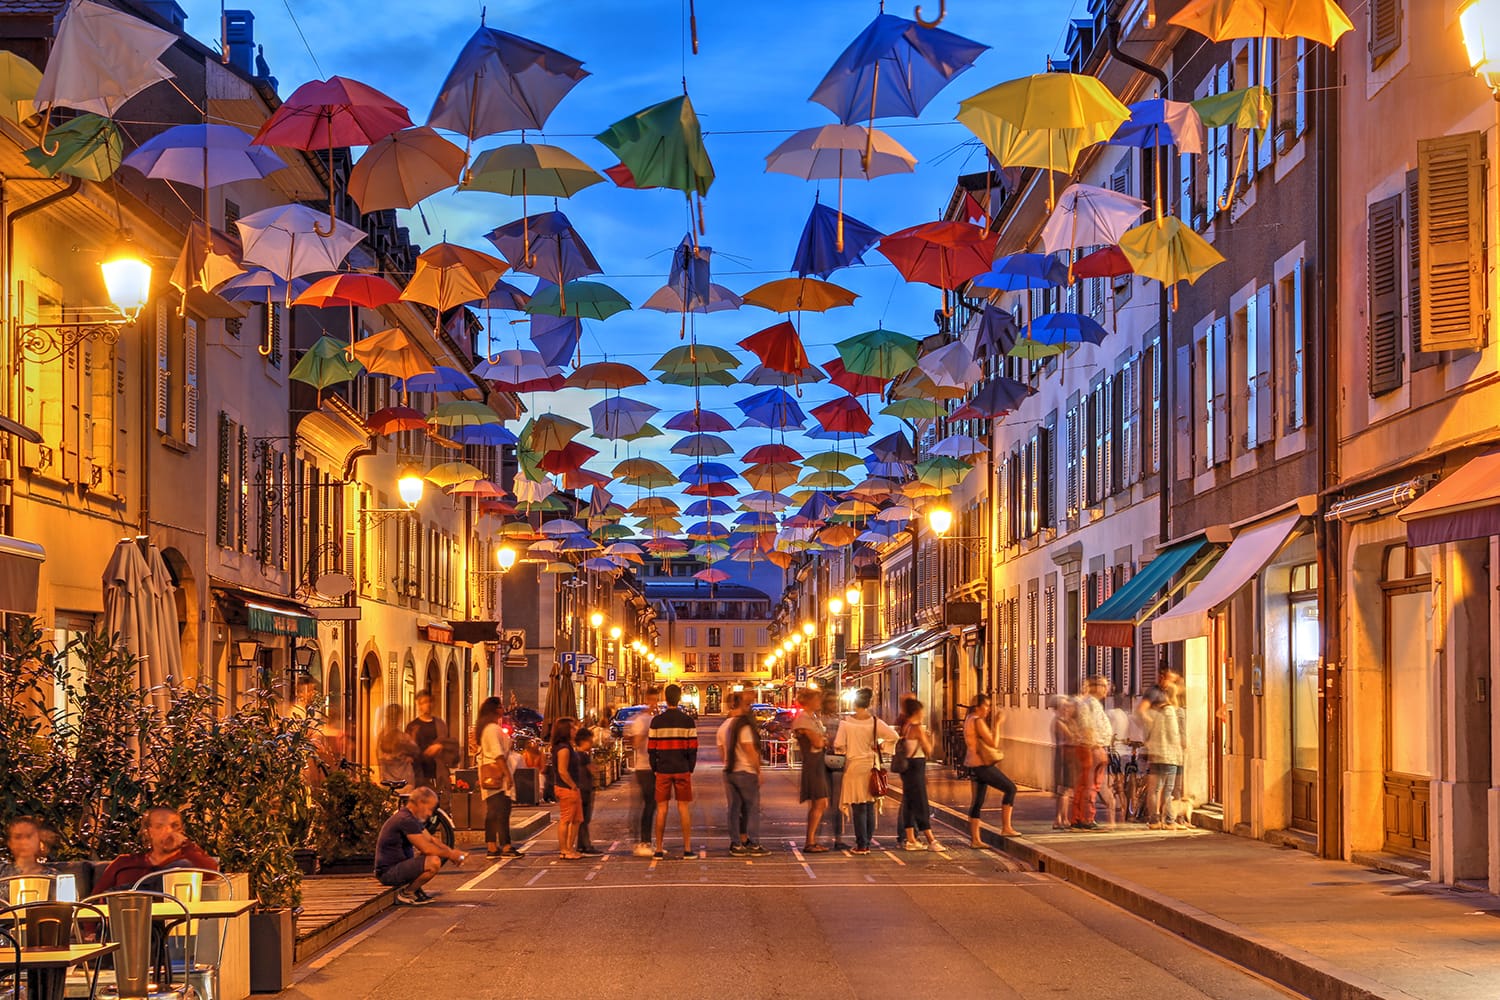 Night scene in Carouge, Geneva, Switzerland along Rue Saint Joseph covered temporarly by colorful umbrellas